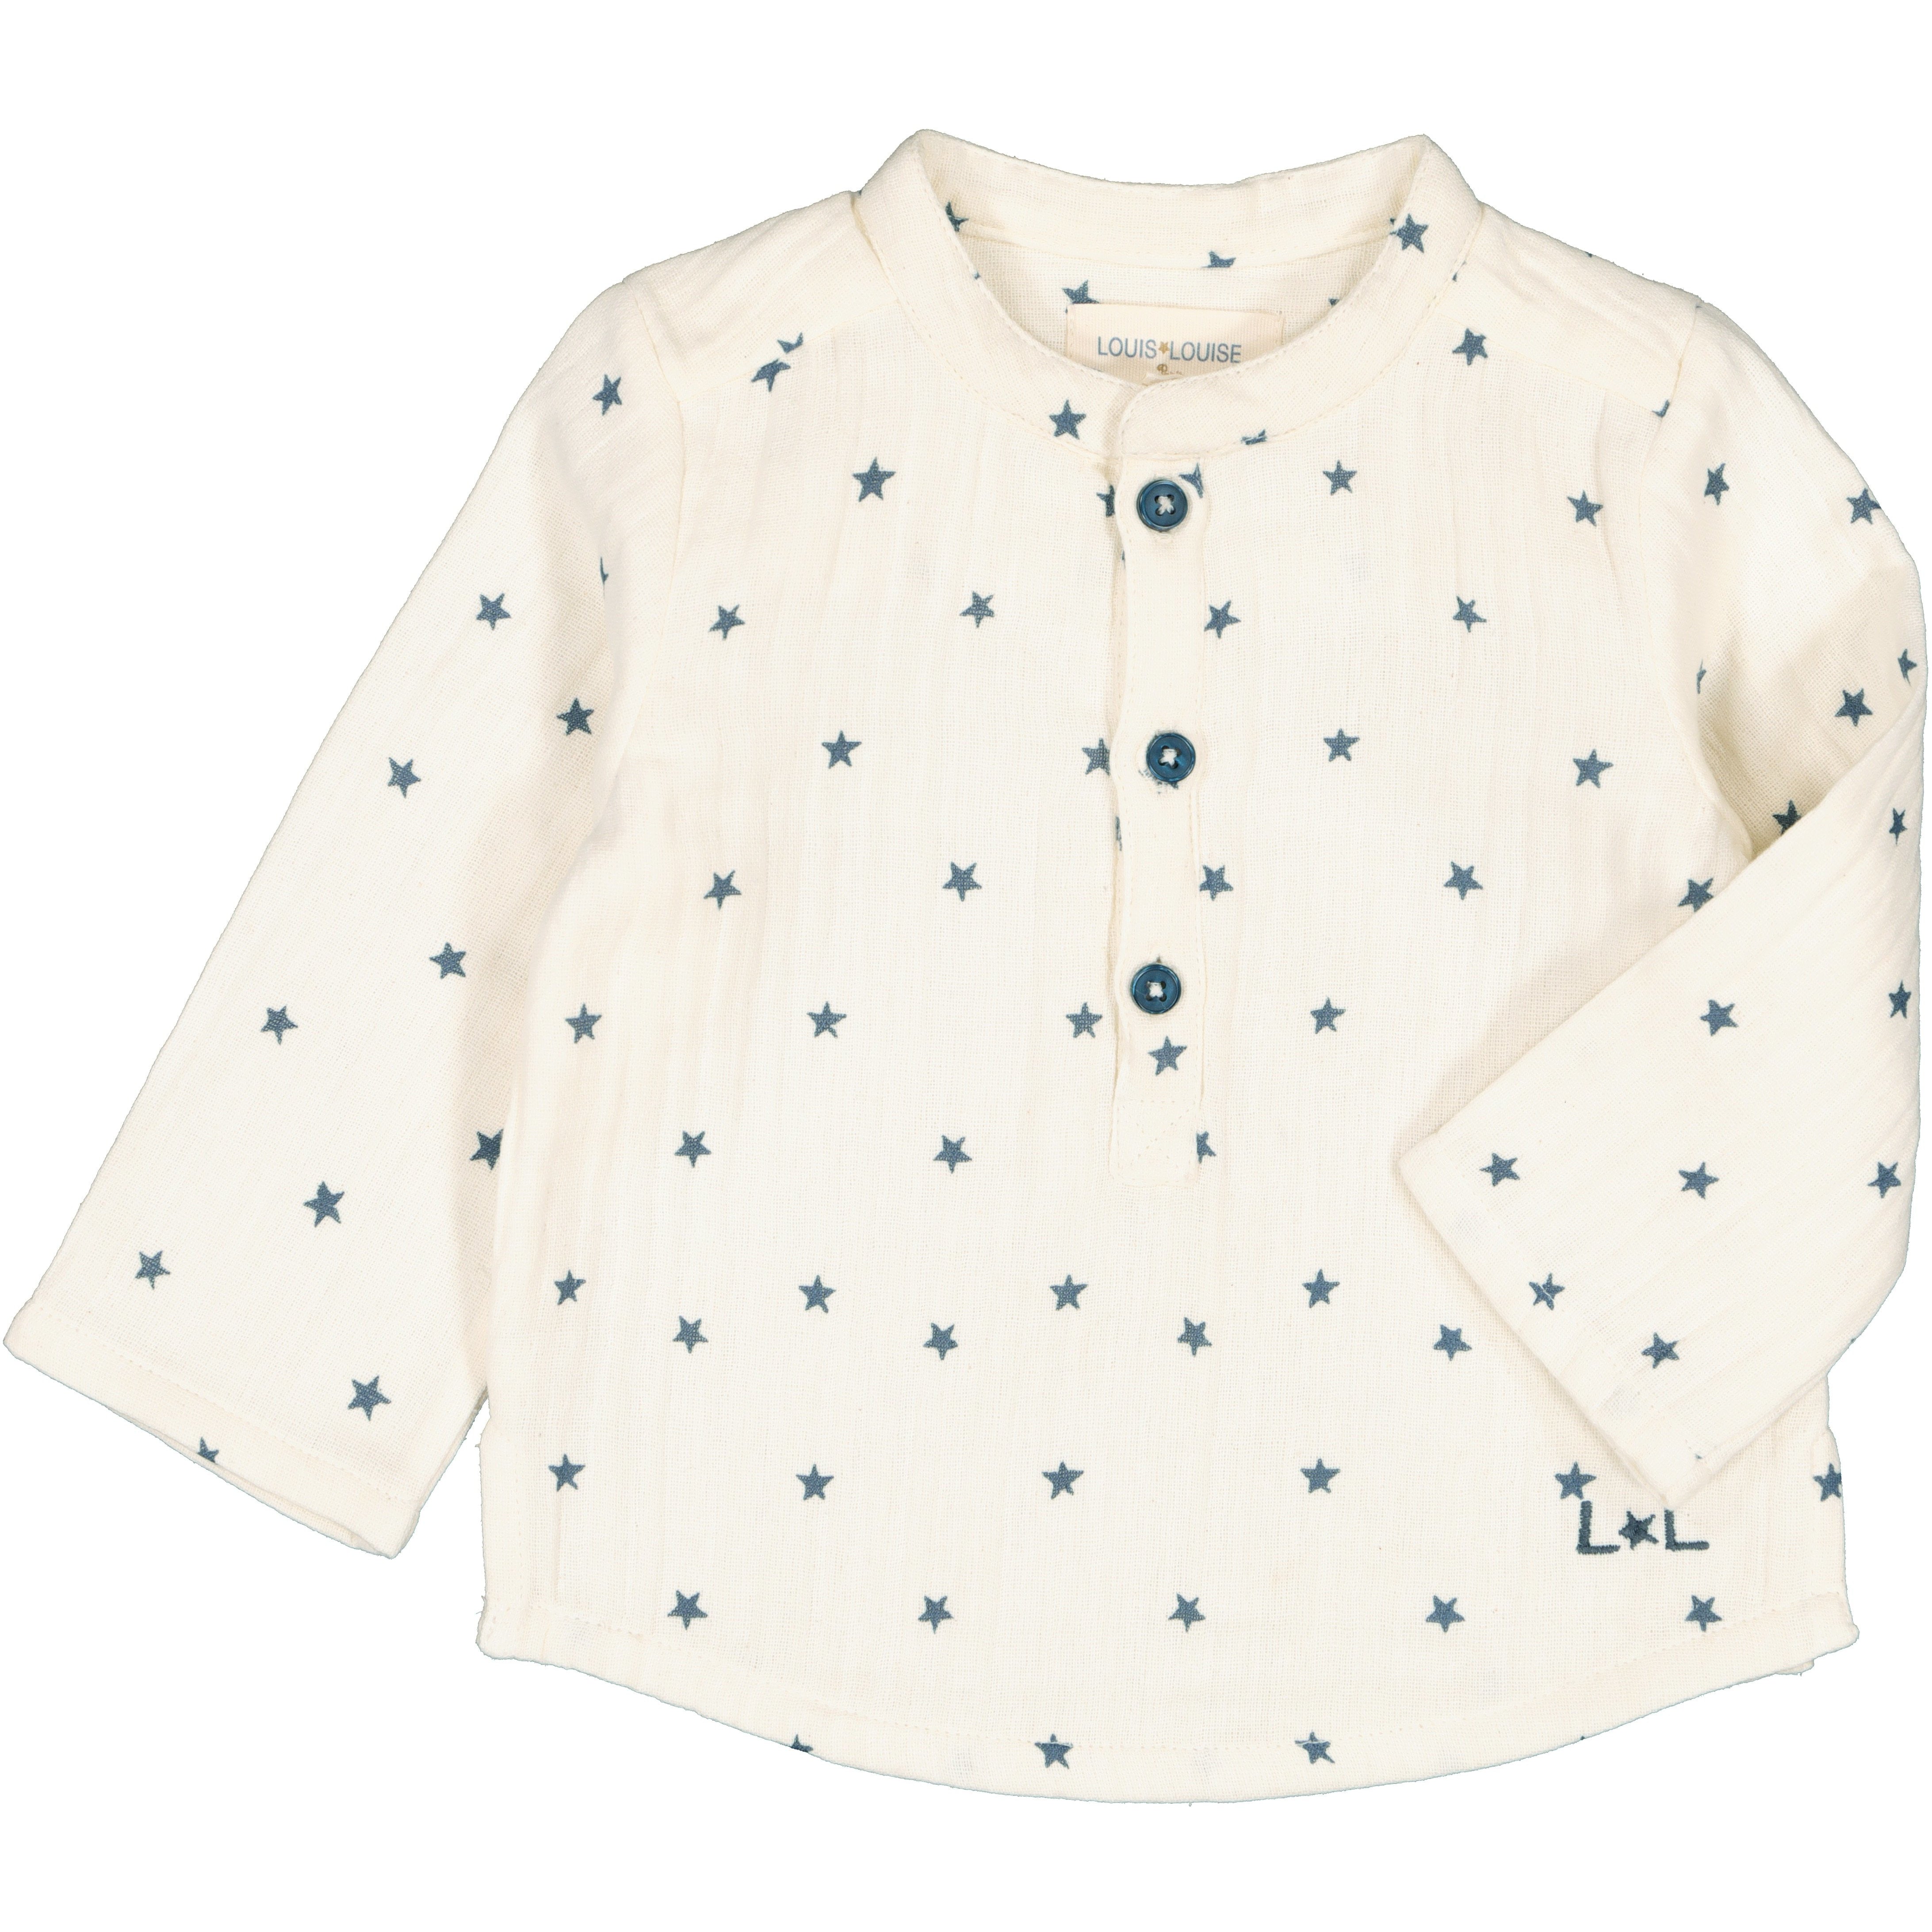 louis louise baby grand-pere shirt off white stars – kodomo